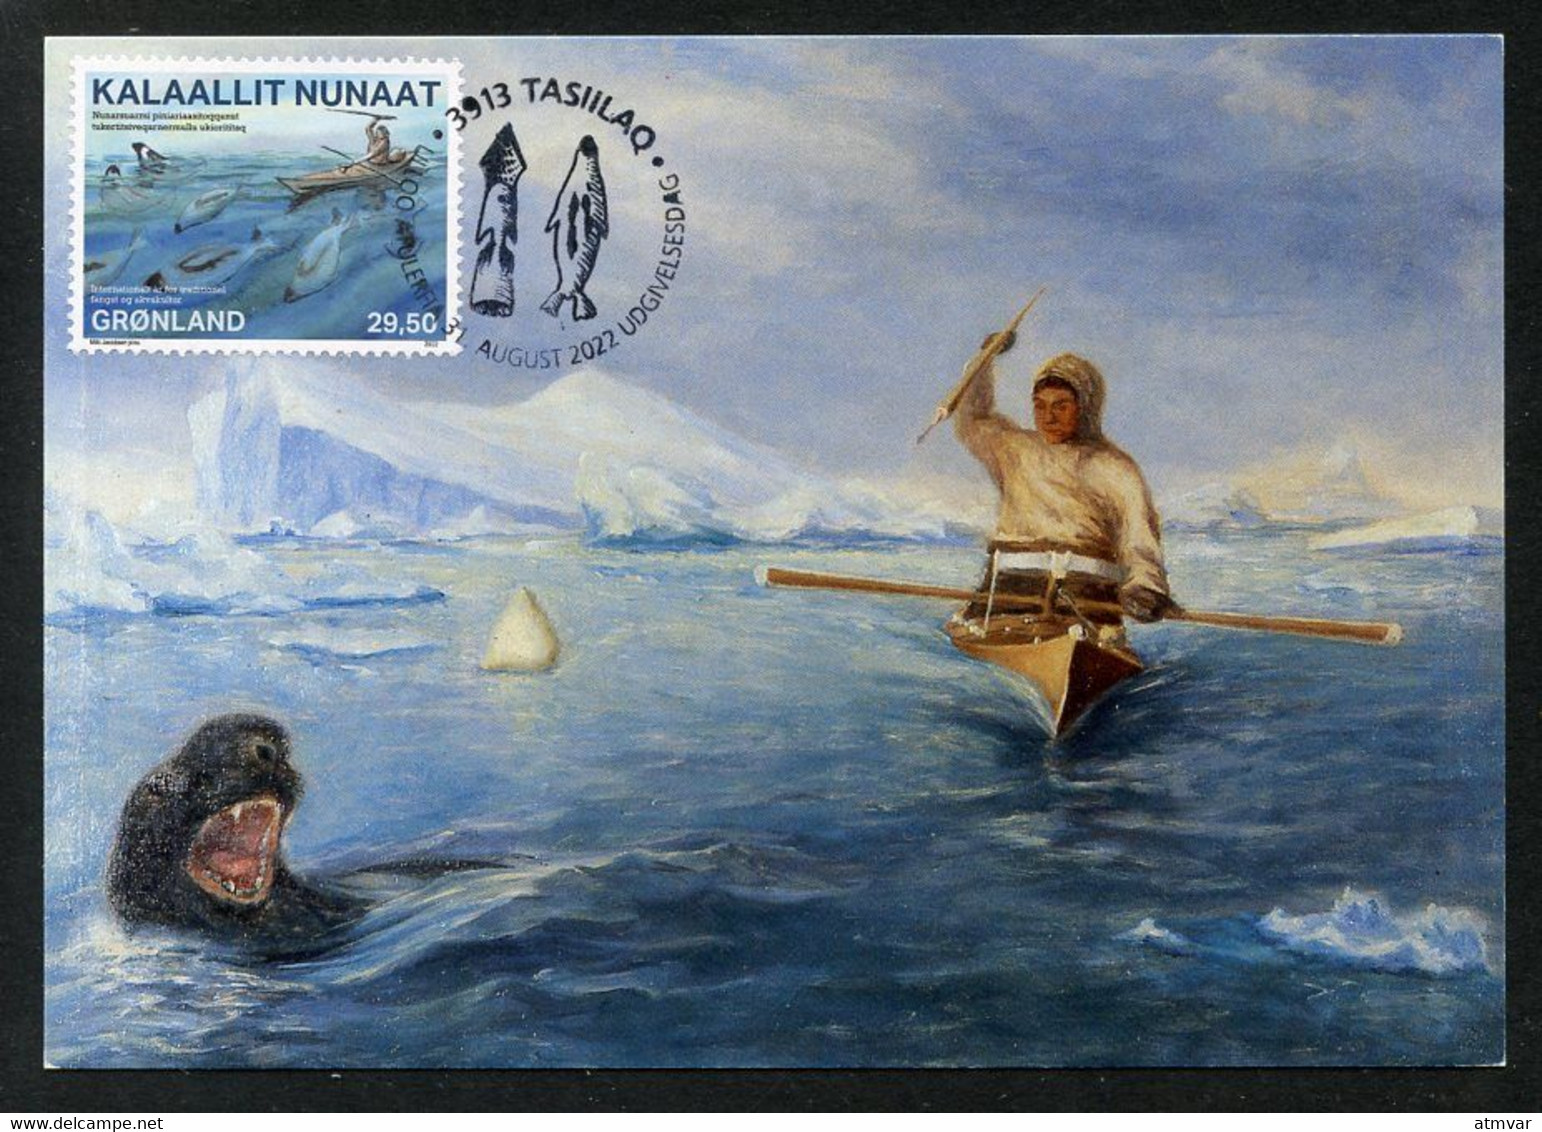 GREENLAND (2022) Carte Maximum Card - UN Year Artisanal Fisheries And Aquaculture, Chasse Phoques, Seal Hunting, Kayak - Cartes-Maximum (CM)